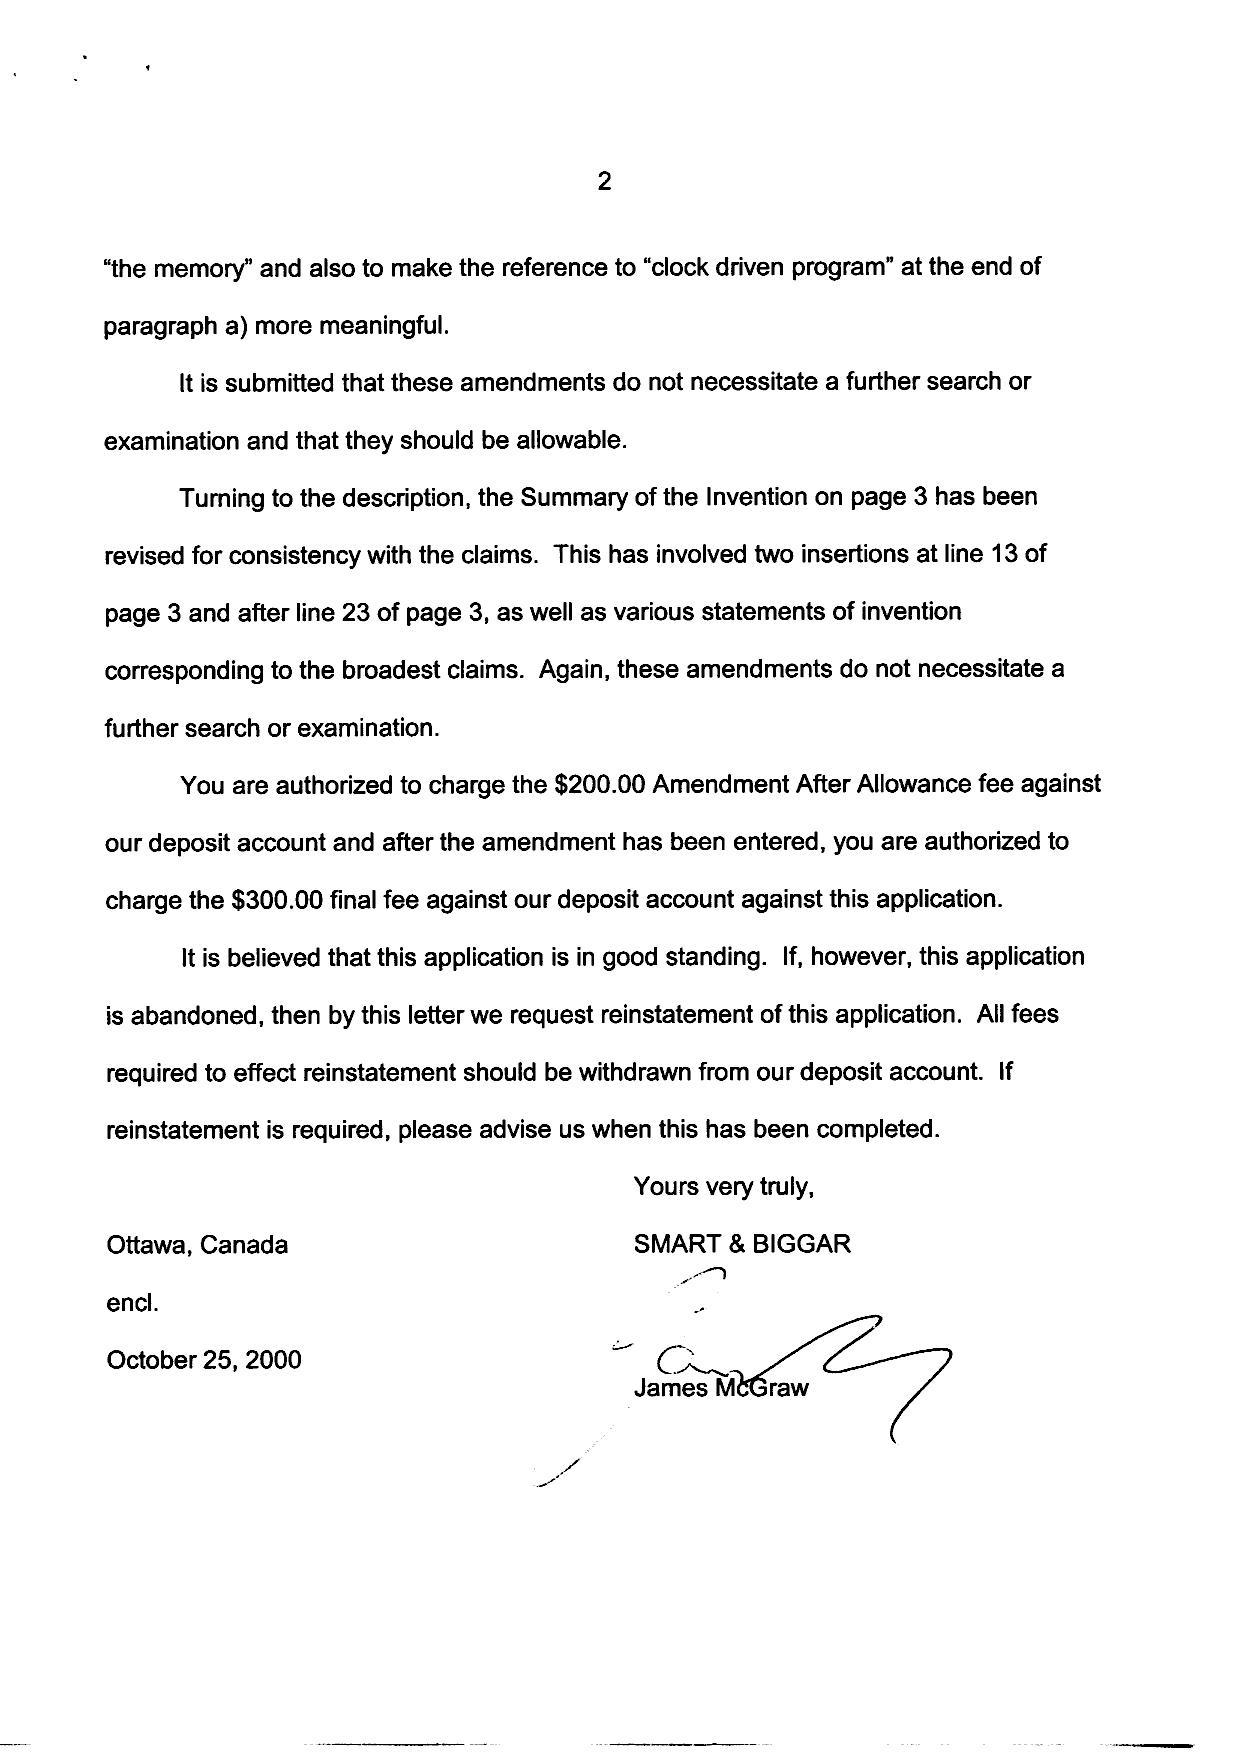 Canadian Patent Document 2211844. Correspondence 20001025. Image 2 of 2